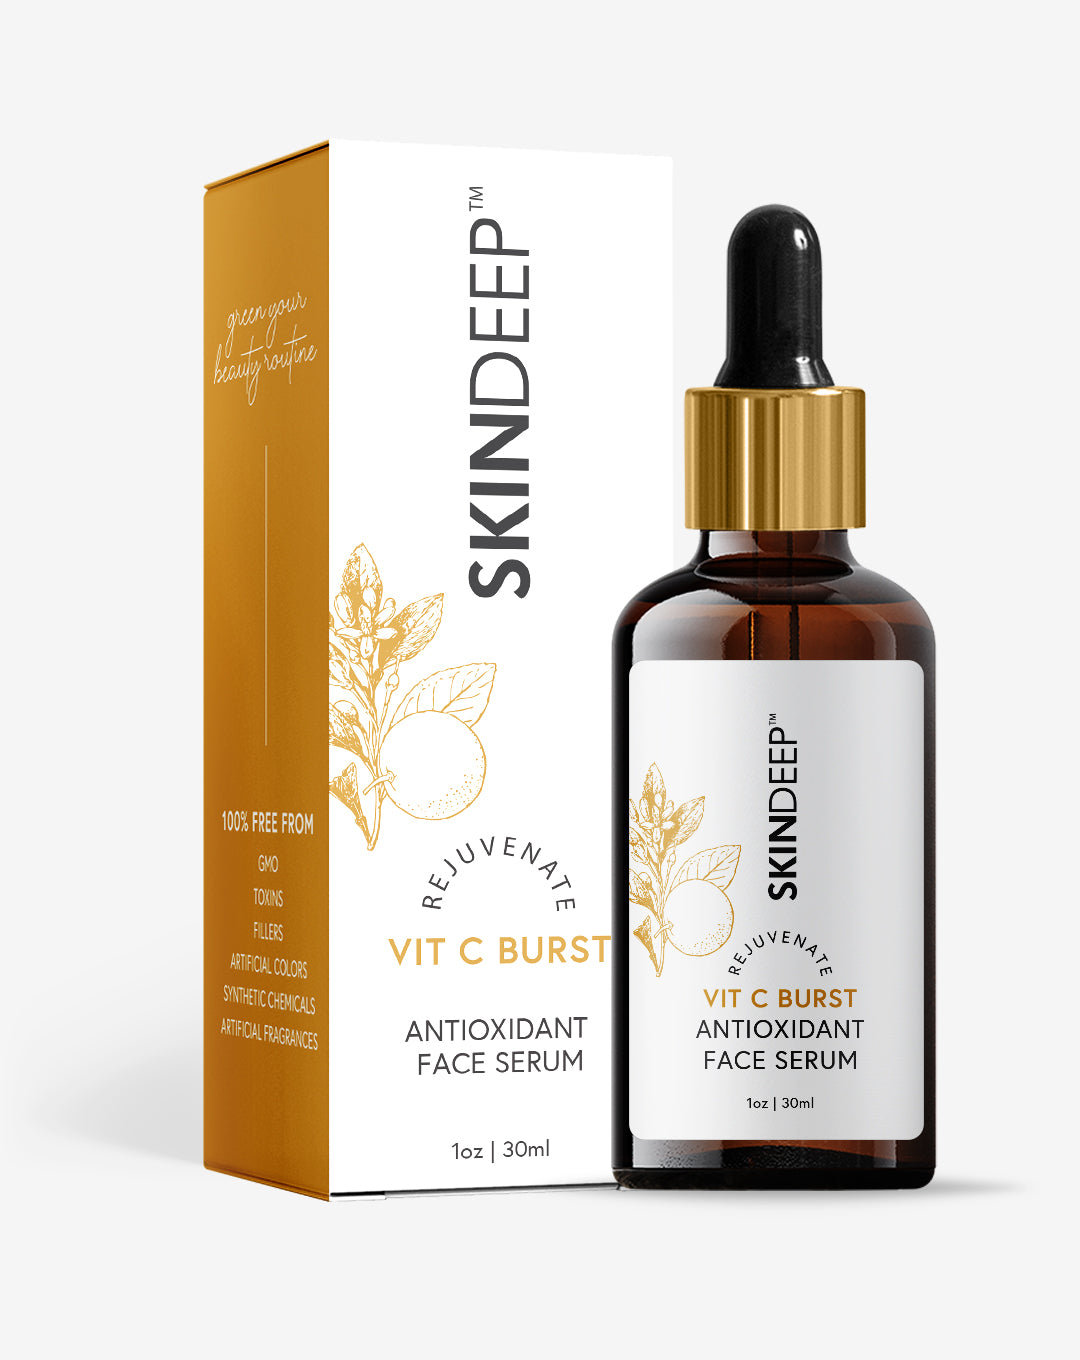 Vit C BURST - Antioxidant Face Serum